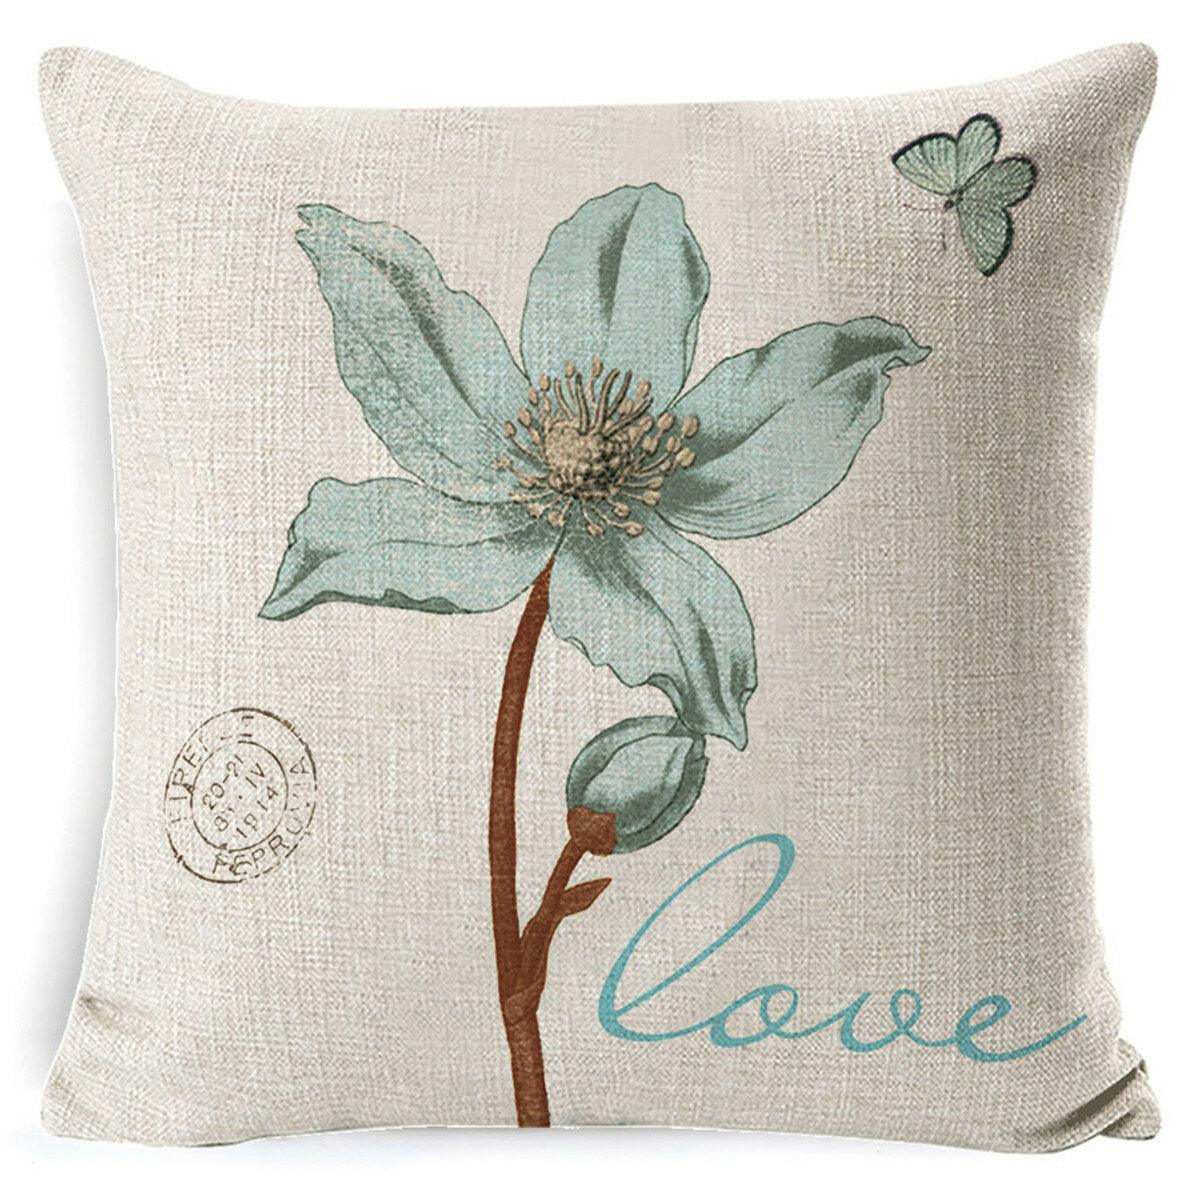 1pc Linen Pillow Cover 45x45cm Flower Bird Pattern Pillowcase Household Sofa Decorative Cushion Cover Supplies